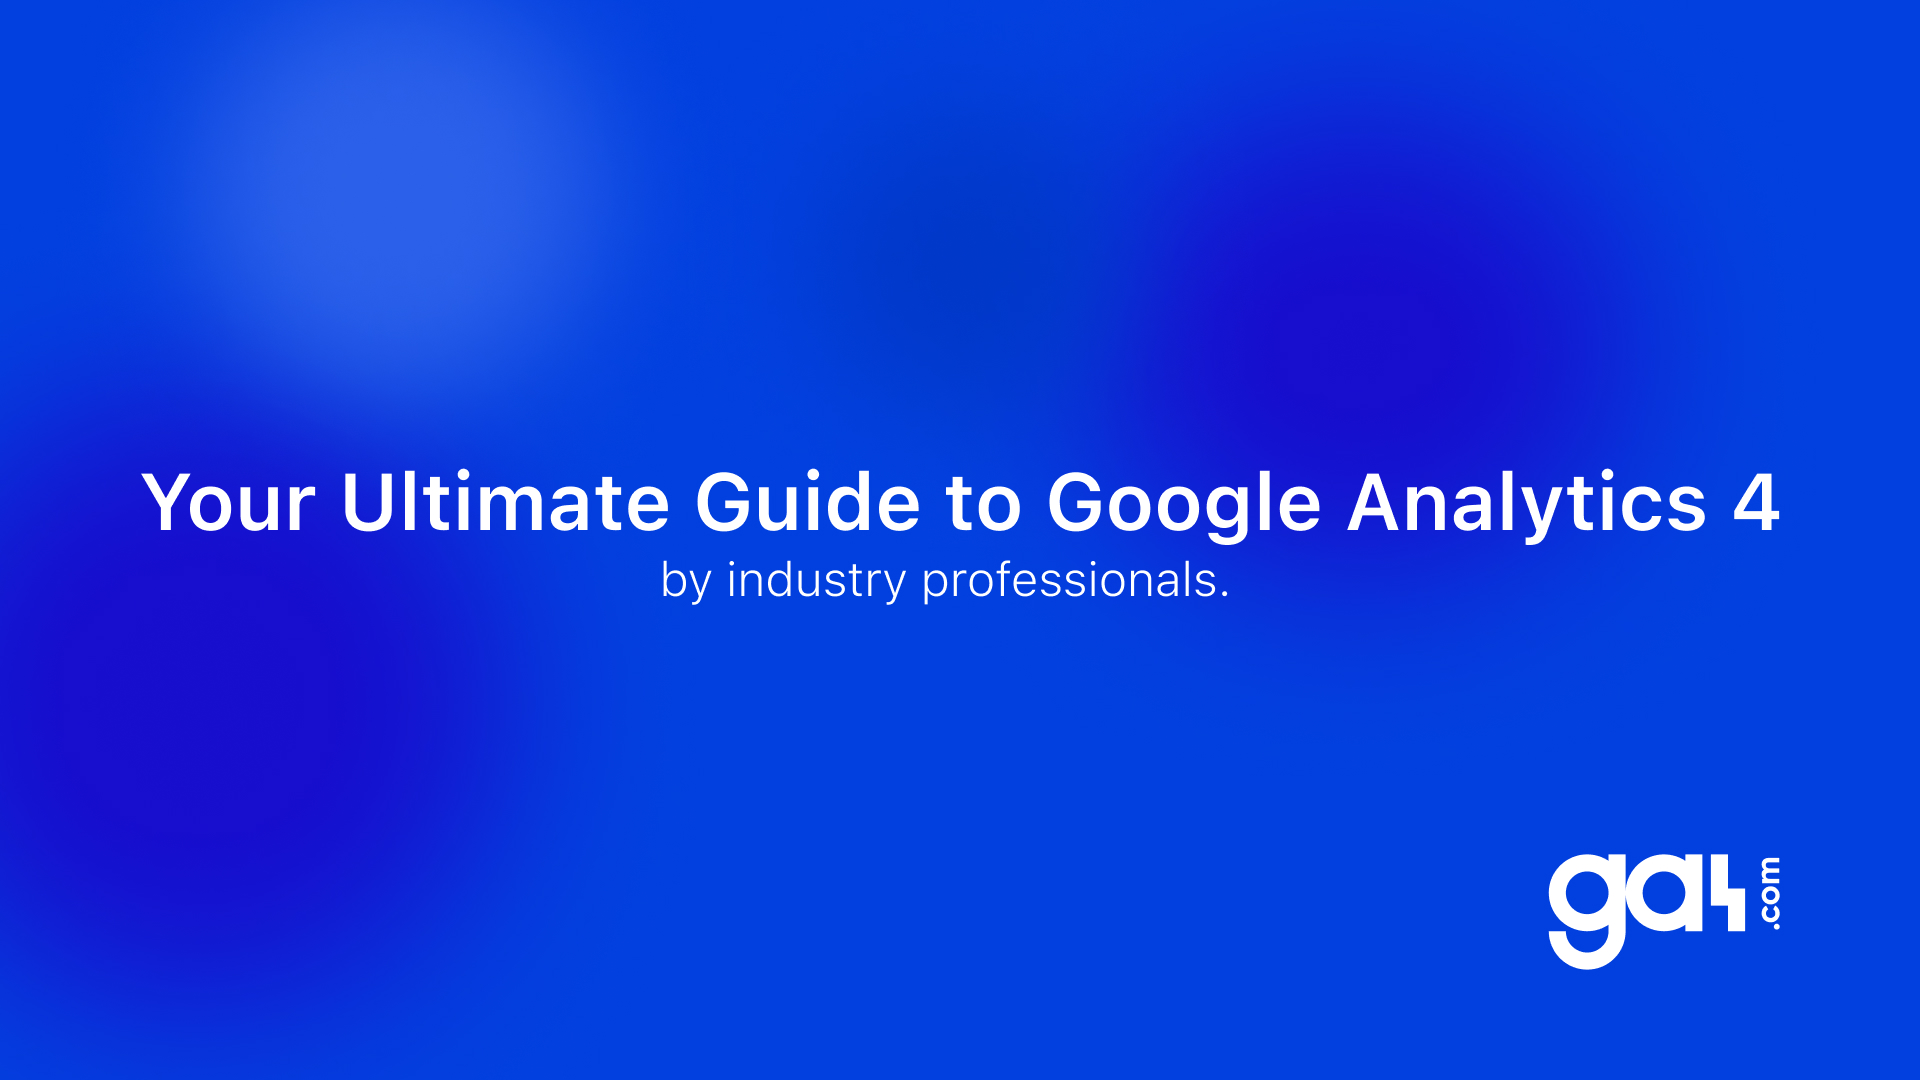 Your Ultimate Guide to Google Analytics 4 (GA4) | GA4.com